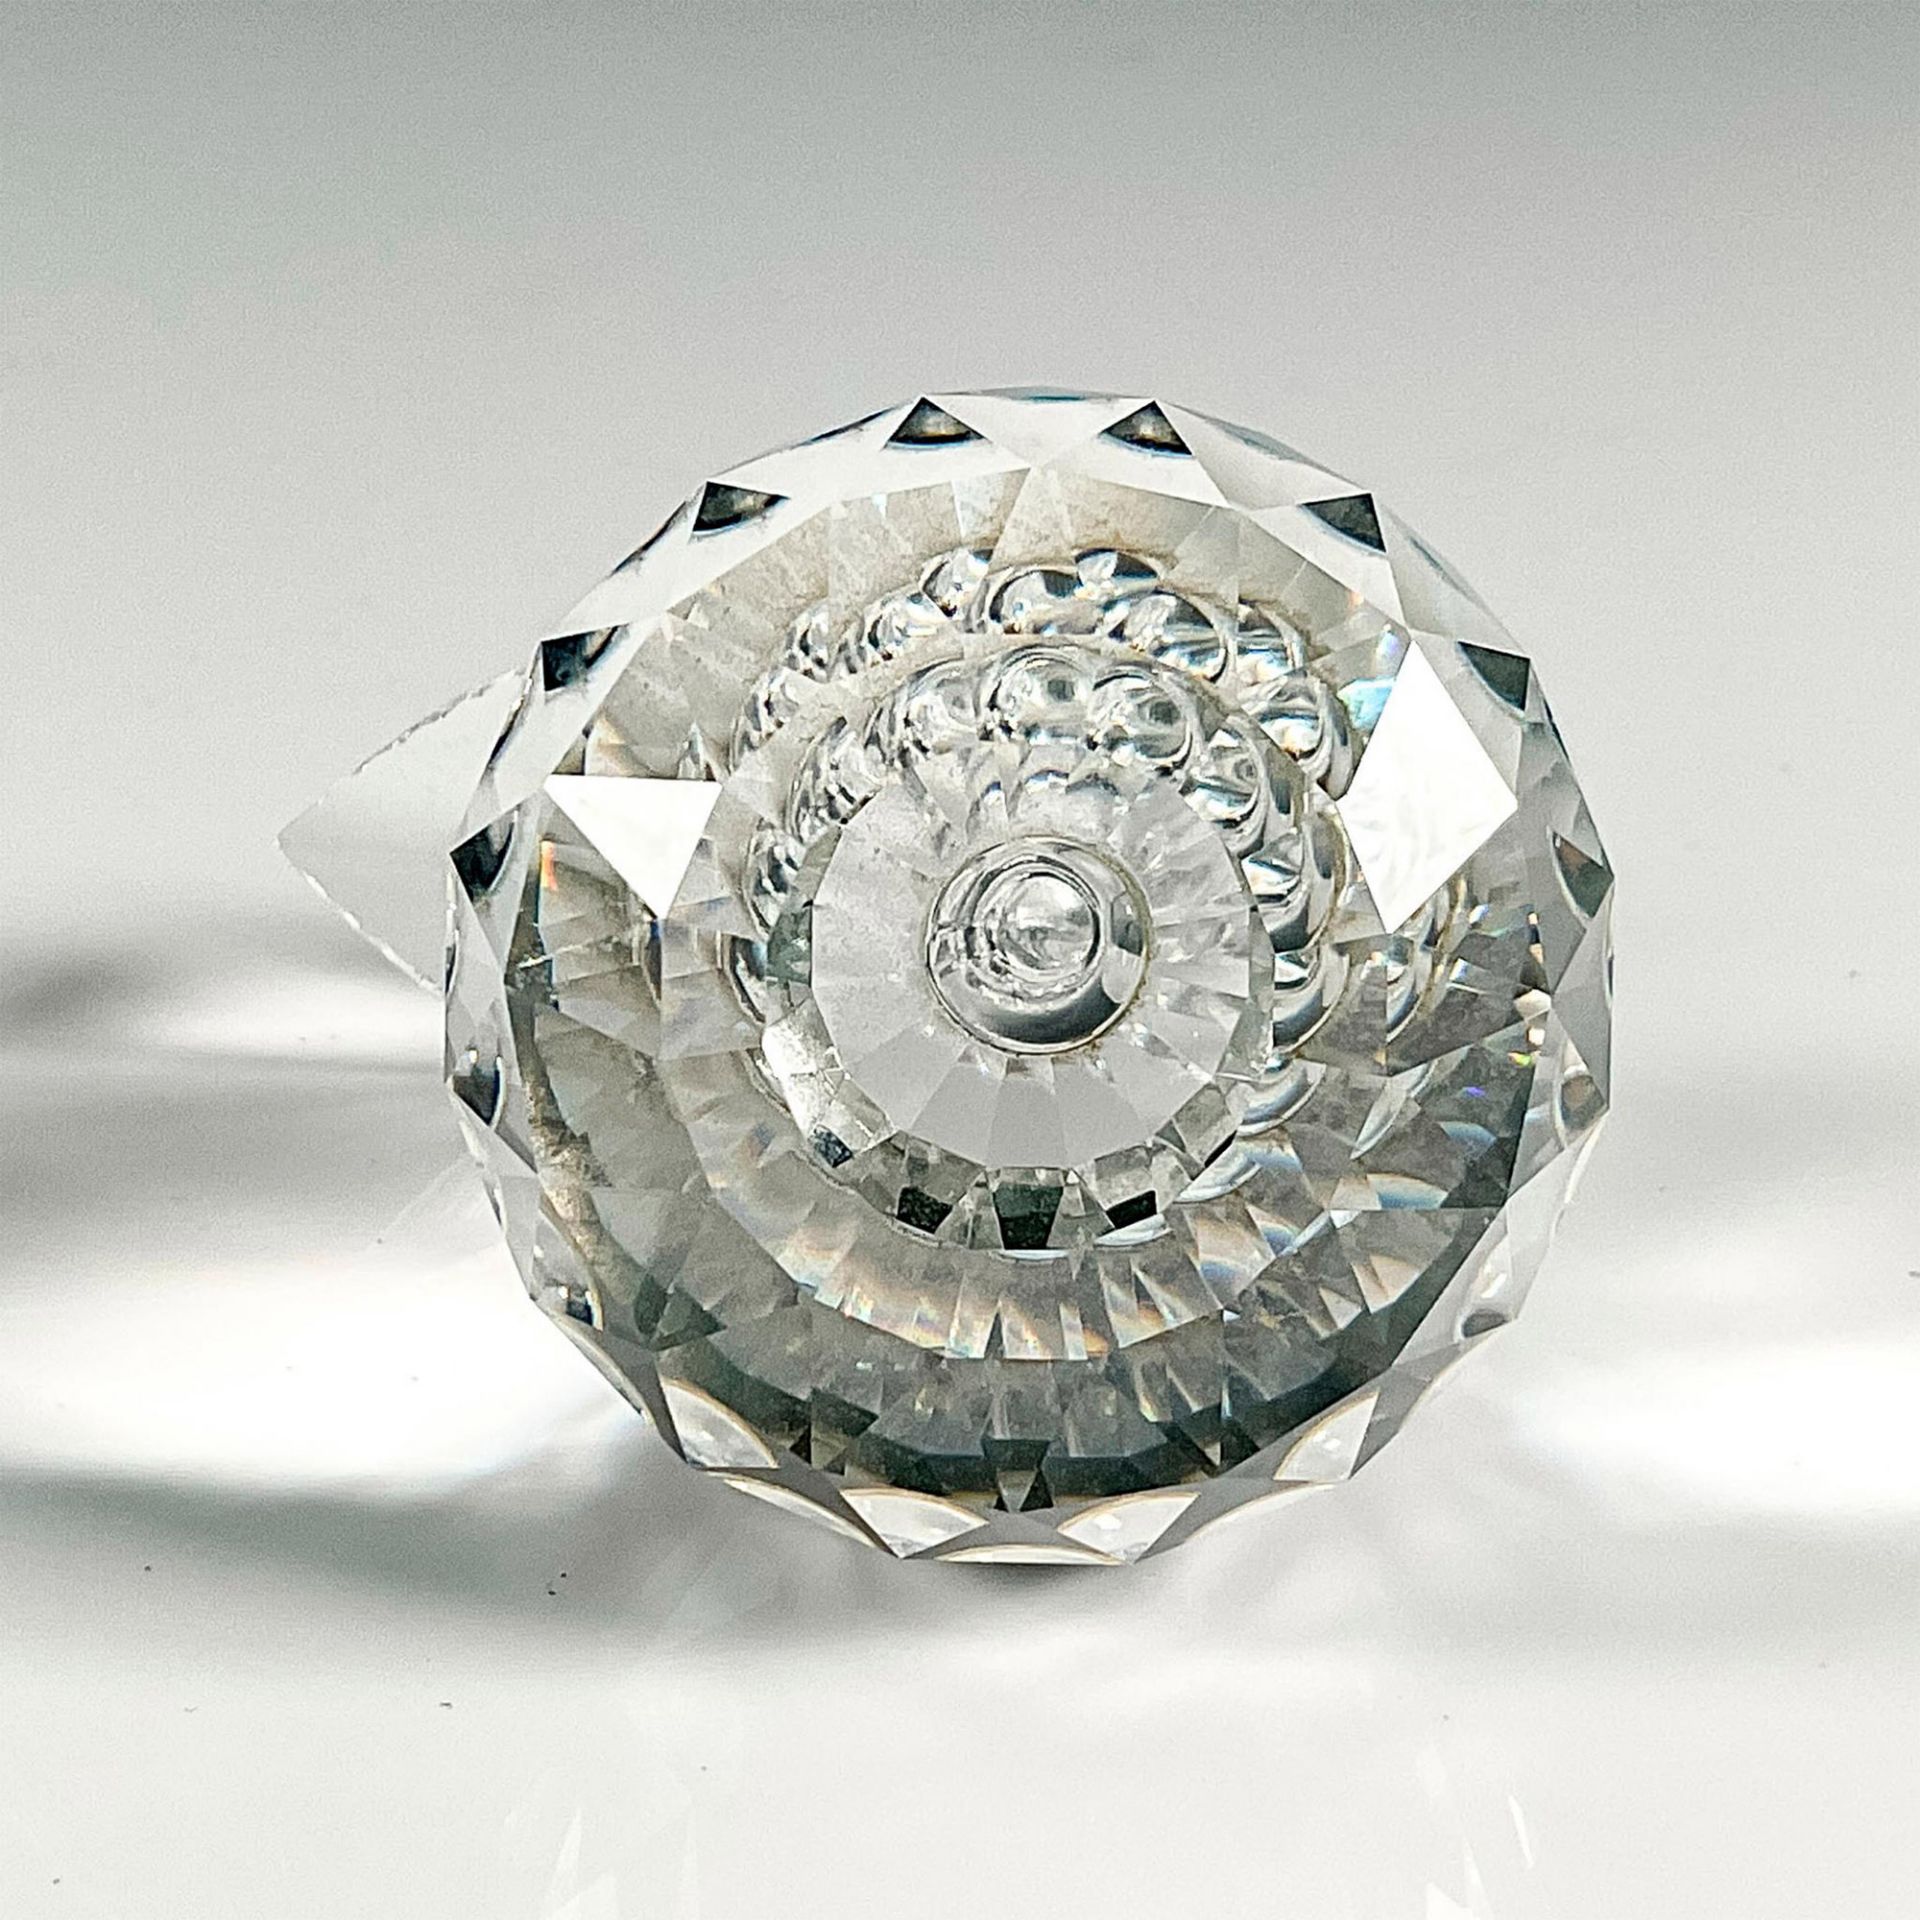 Swarovski Silver Crystal Figurine, Pear - Image 3 of 4